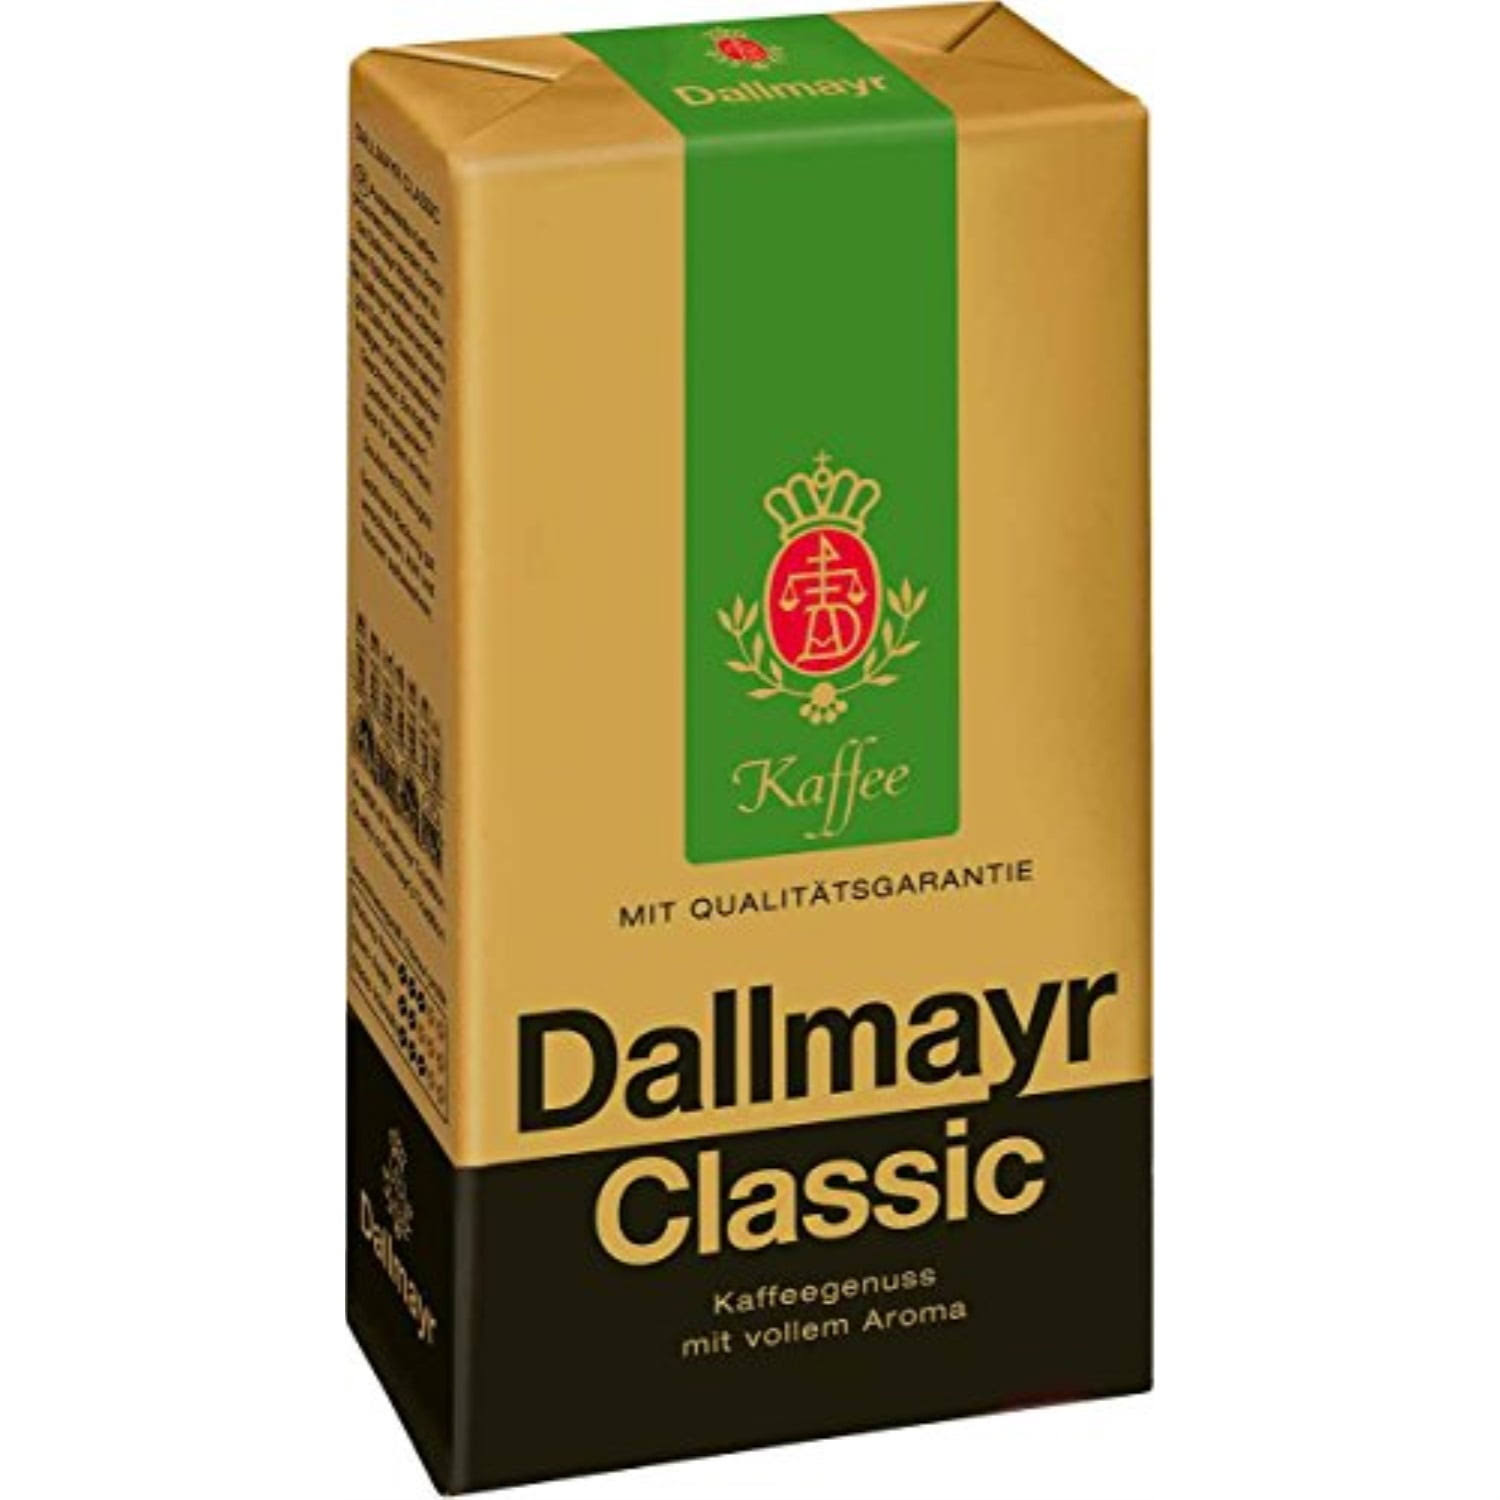 Dallmayr Classic Premium Coffee - 250g